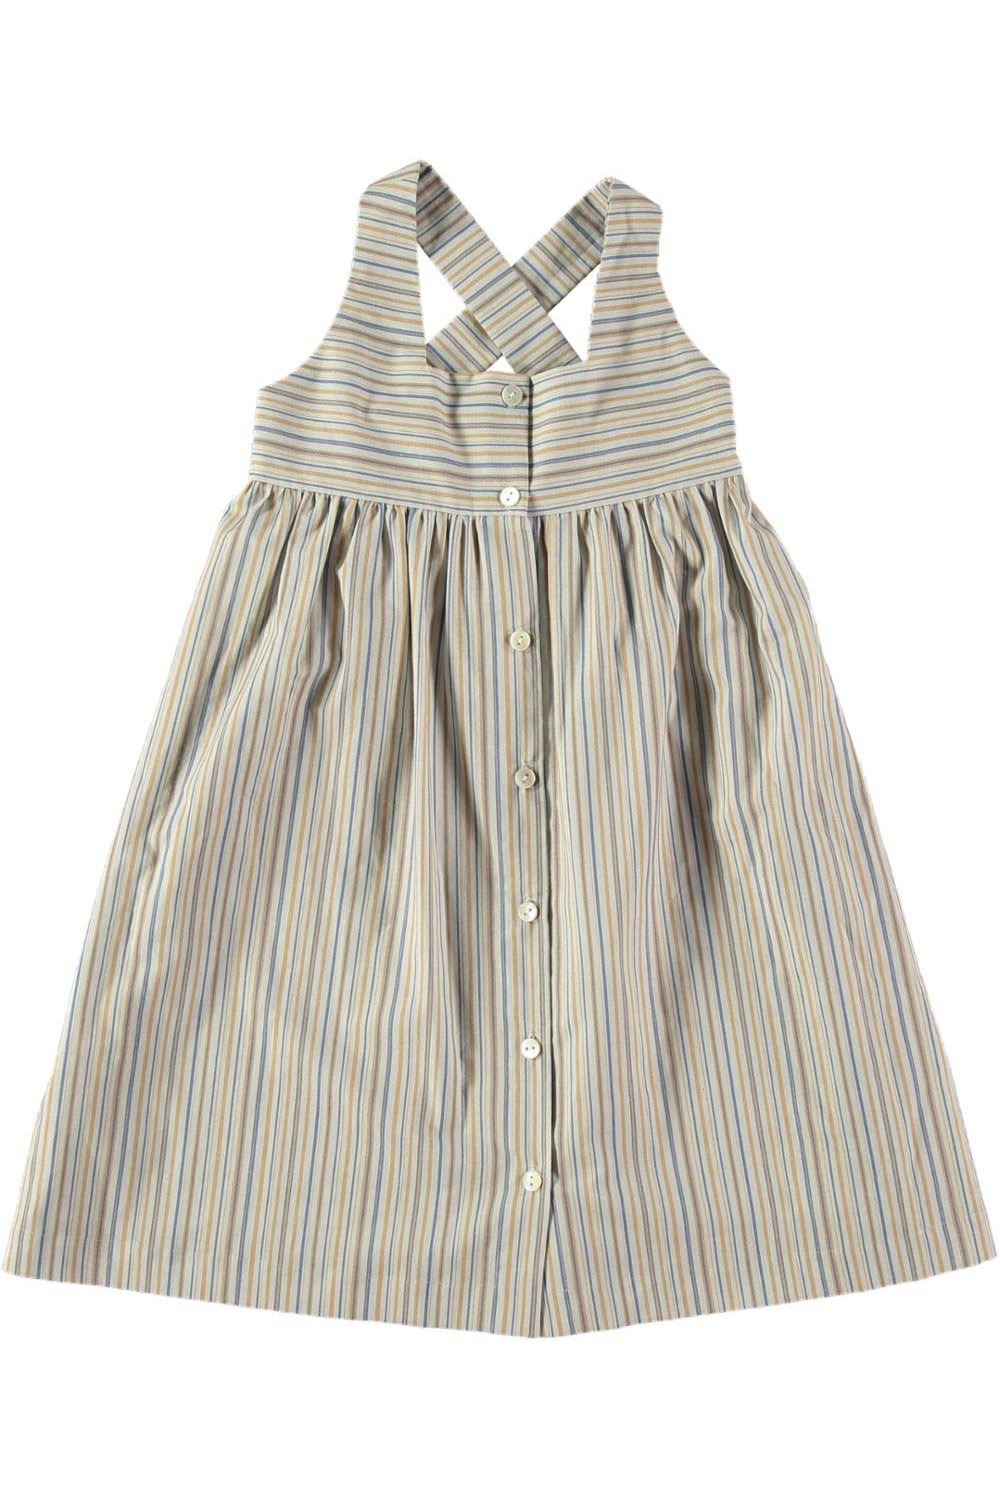 amiga girl summer dress stripes